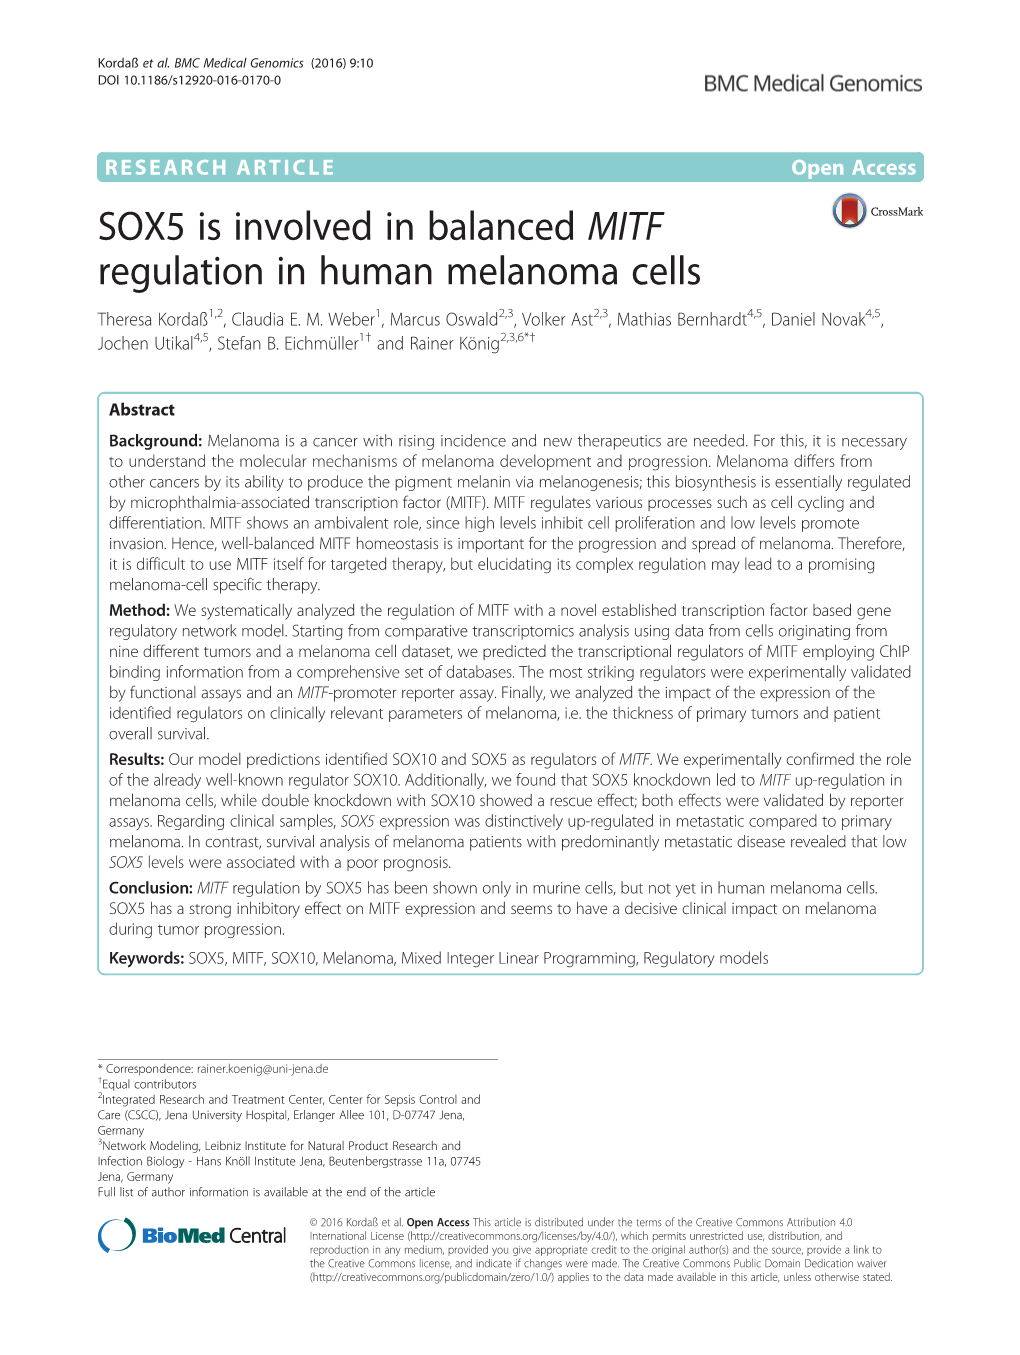 SOX5 Is Involved in Balanced MITF Regulation in Human Melanoma Cells Theresa Kordaß1,2, Claudia E